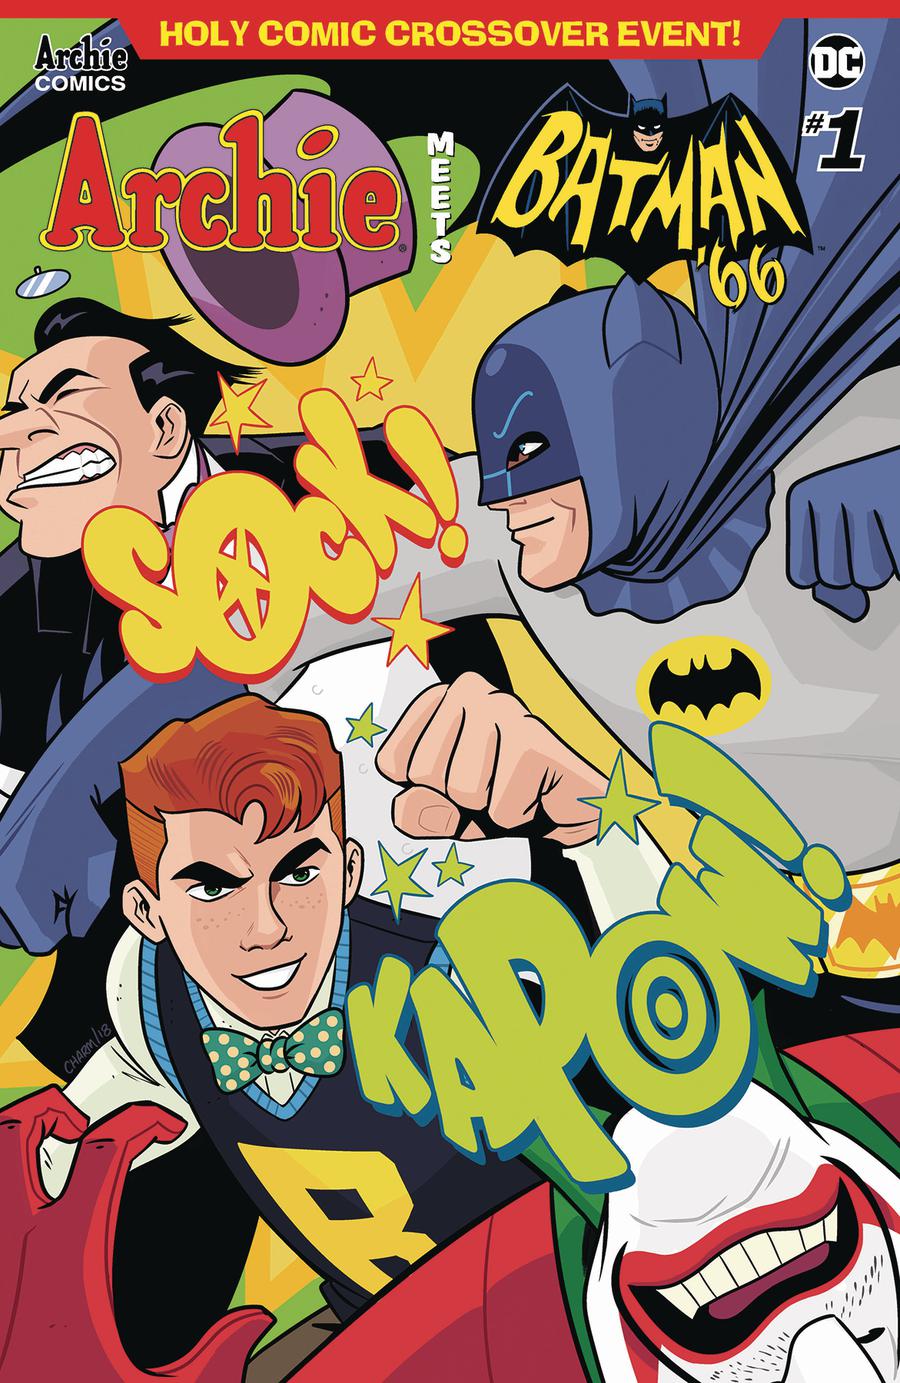 Archie Meets Batman 66 #1 Cover B Variant Derek Charm Cover